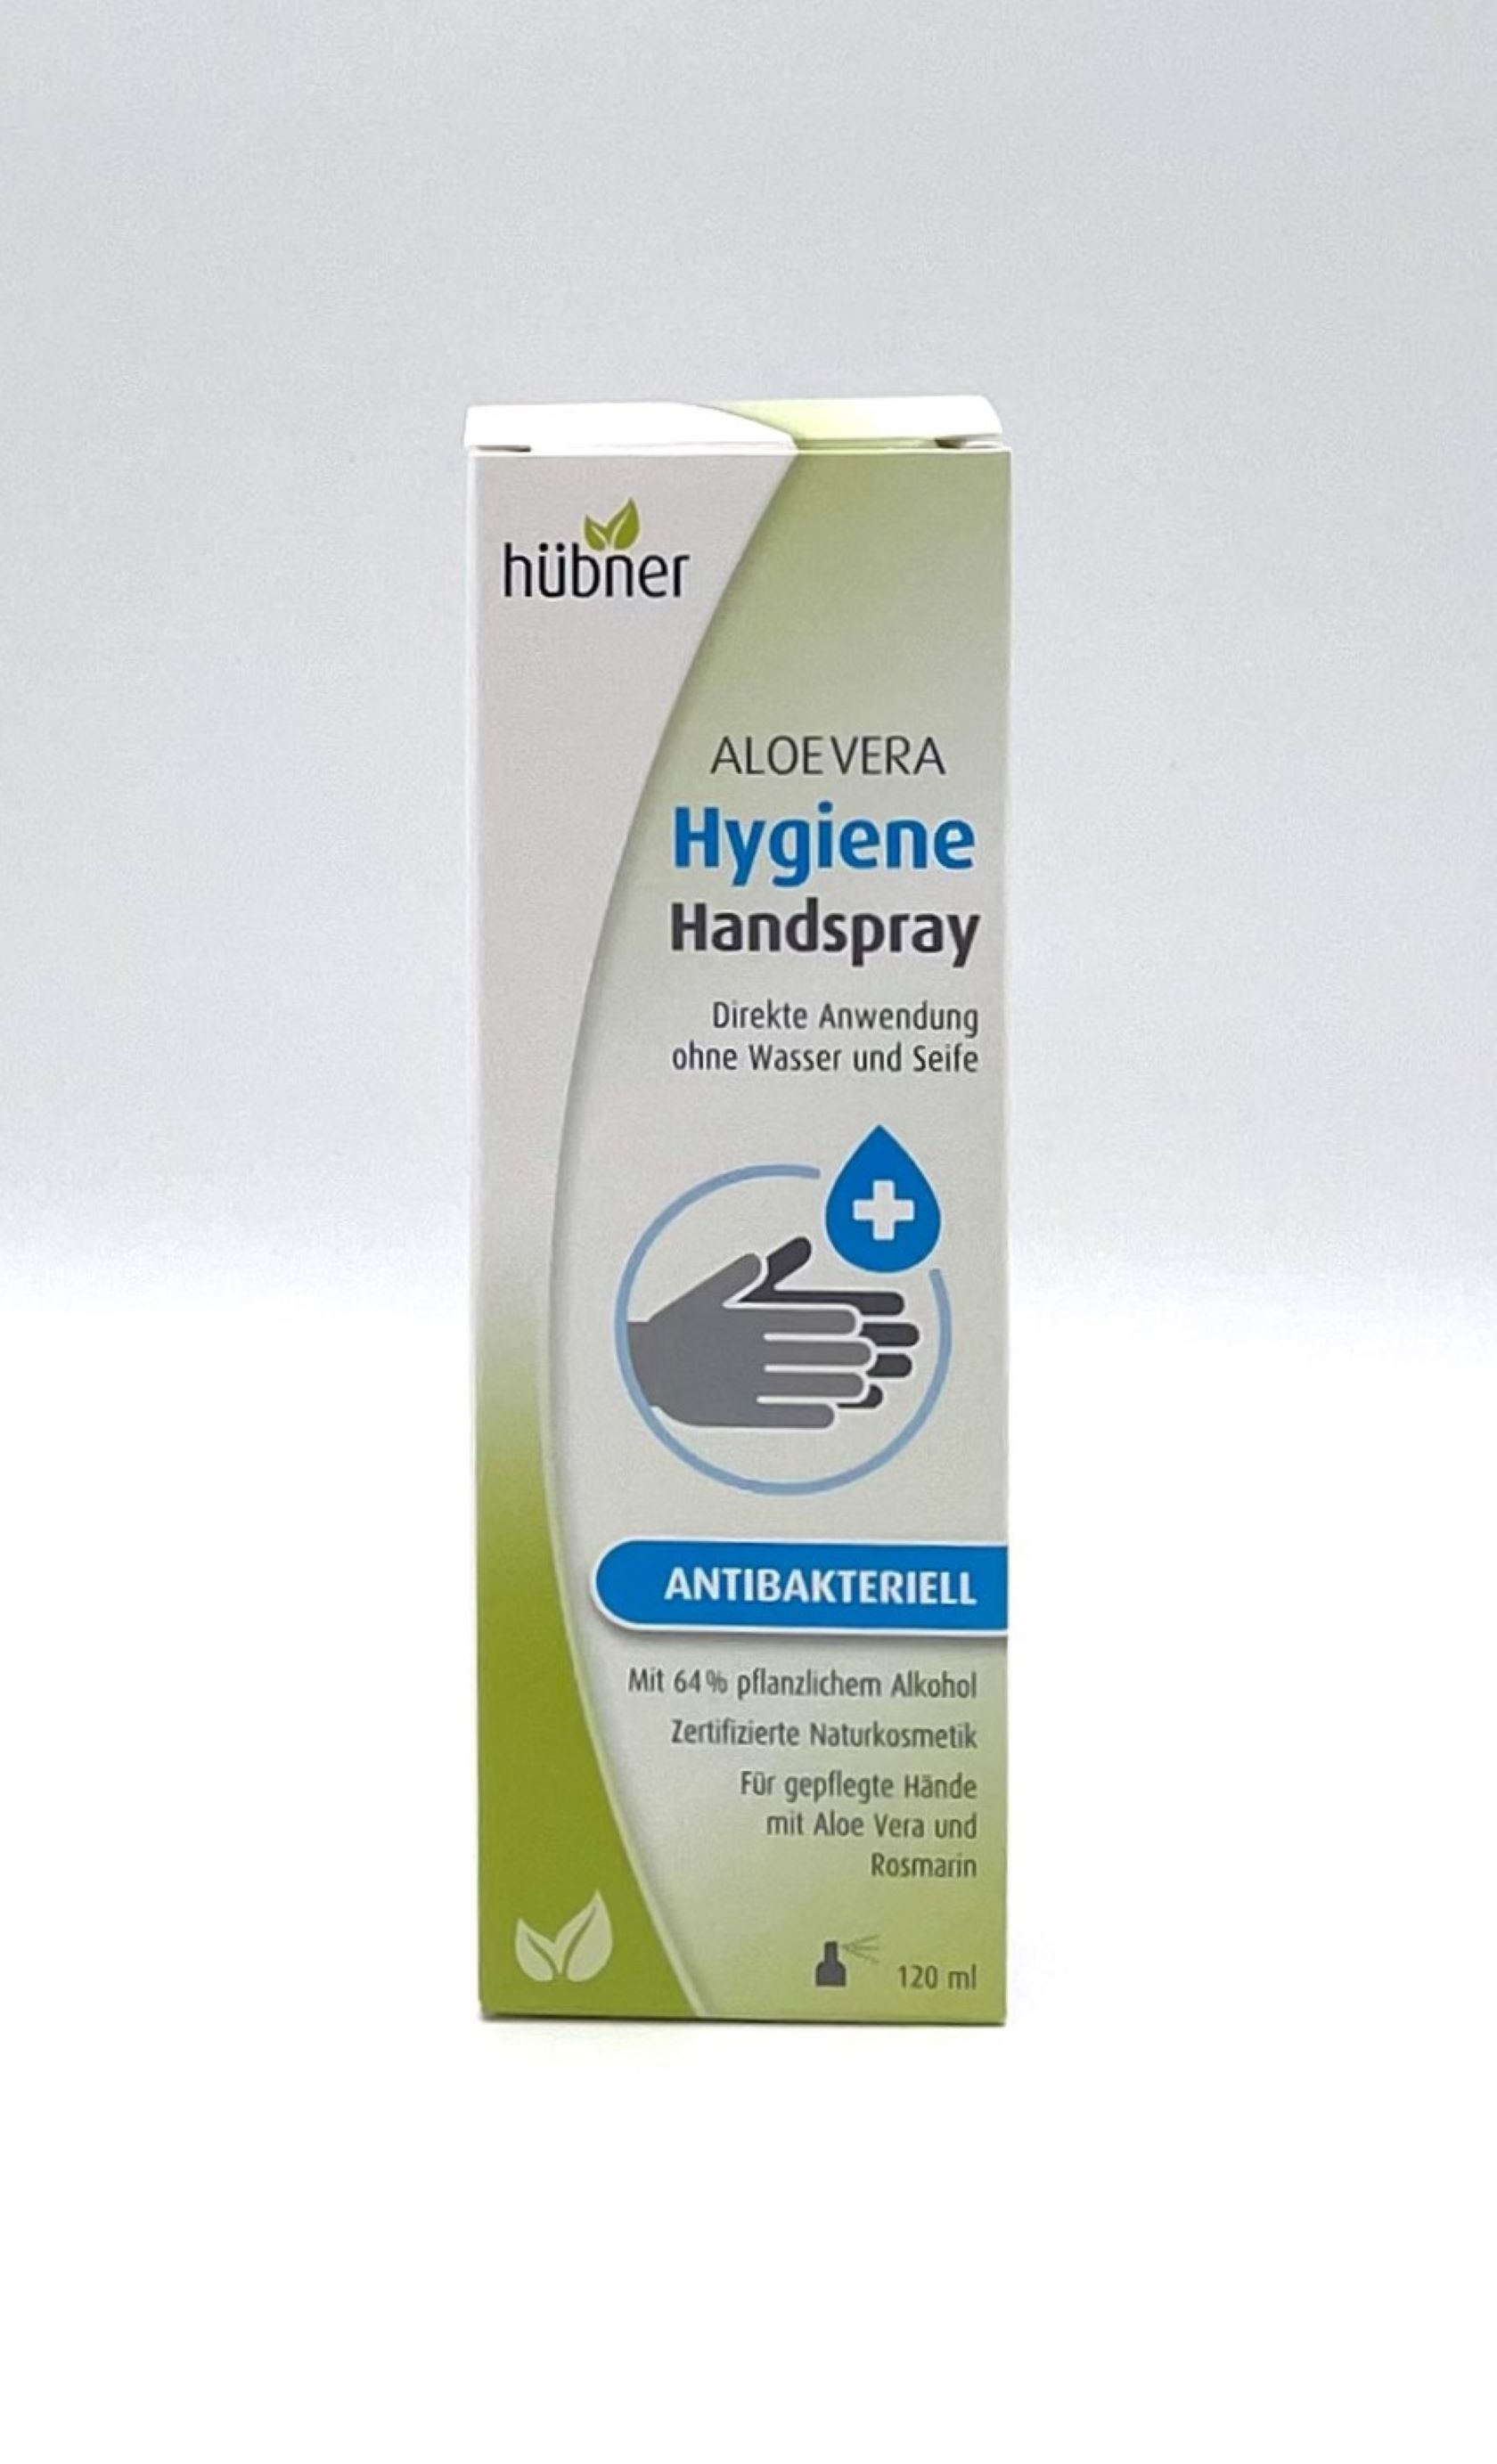 Hübner Aloe Vera Hygiene Handspray 120ml